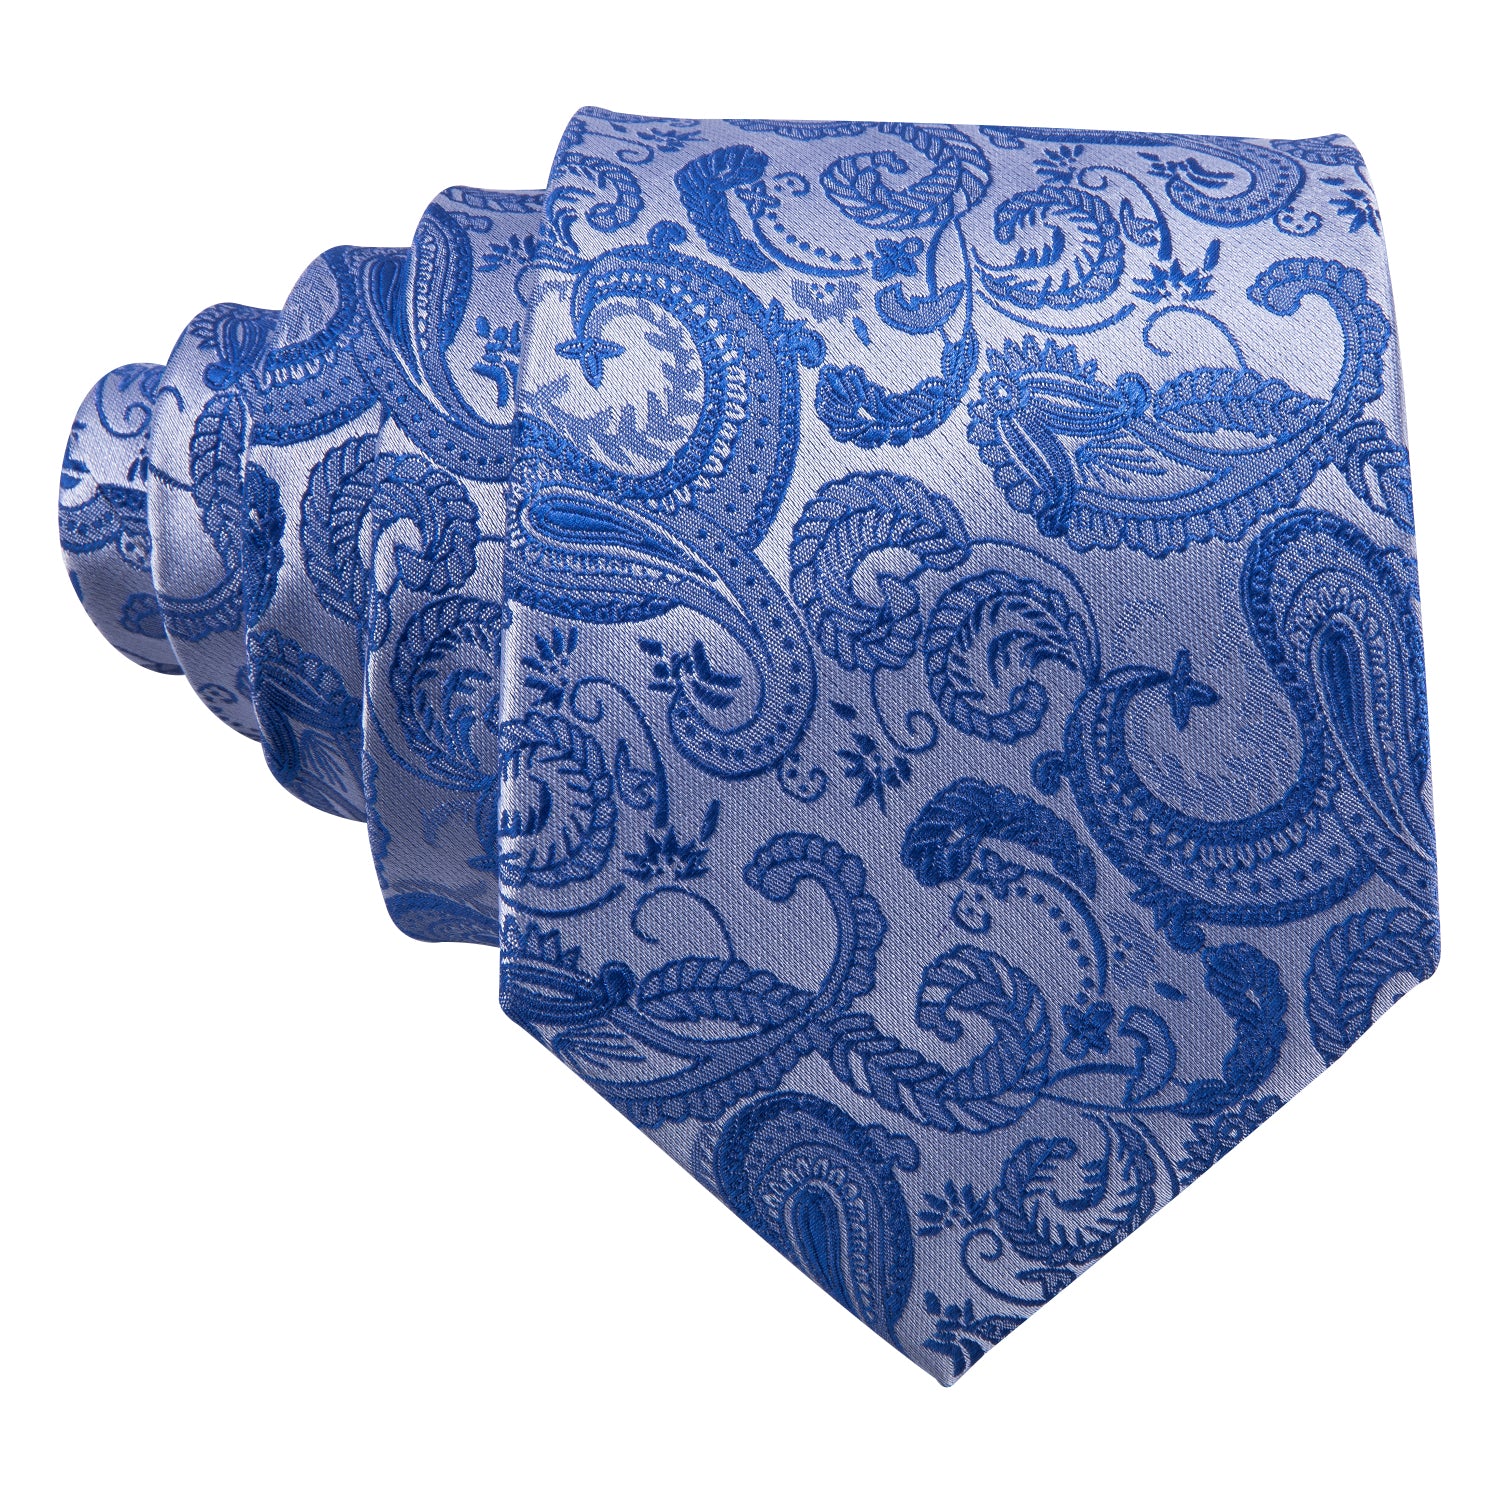  Blue Tie Essential Blue Paisley Tie Pocket Square Cufflinks Set